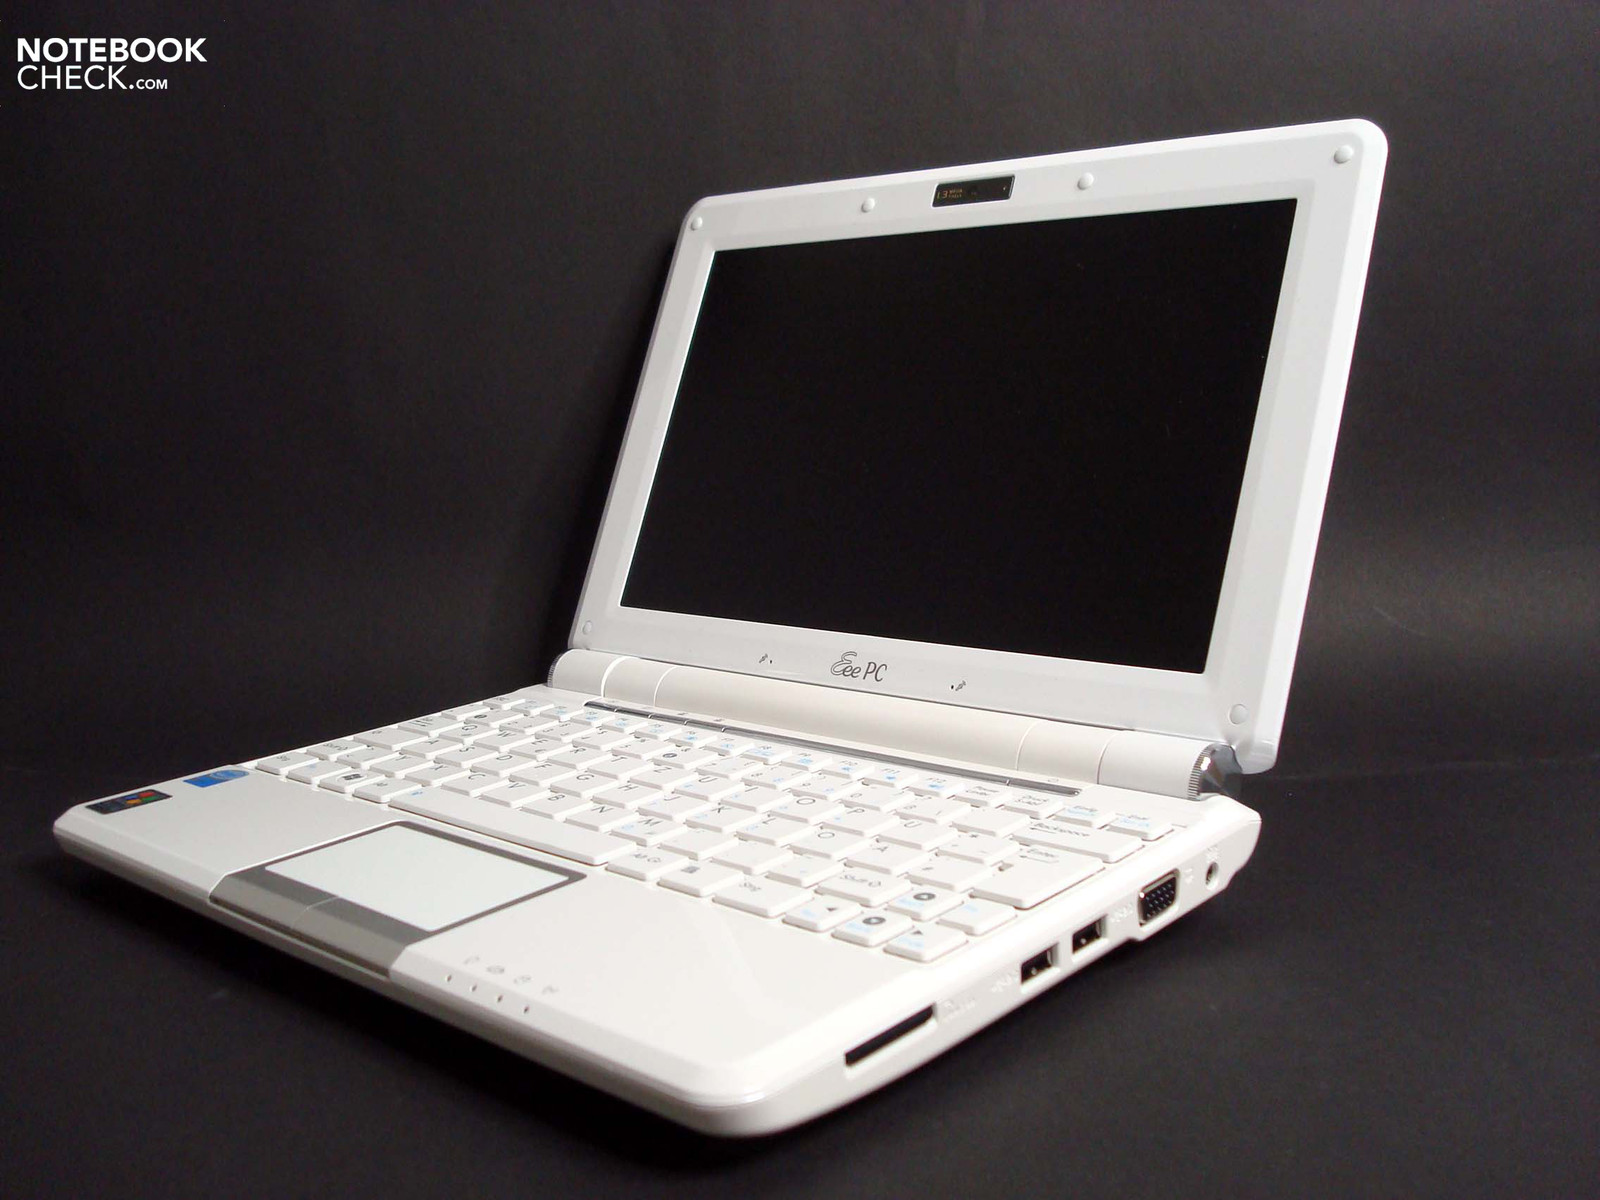 Asus eee купить. Мини ноутбук ASUS Eee PC. ASUS Eee 1000. Нетбук ASUS Eee PC белый. ASUS Eee PC x100.